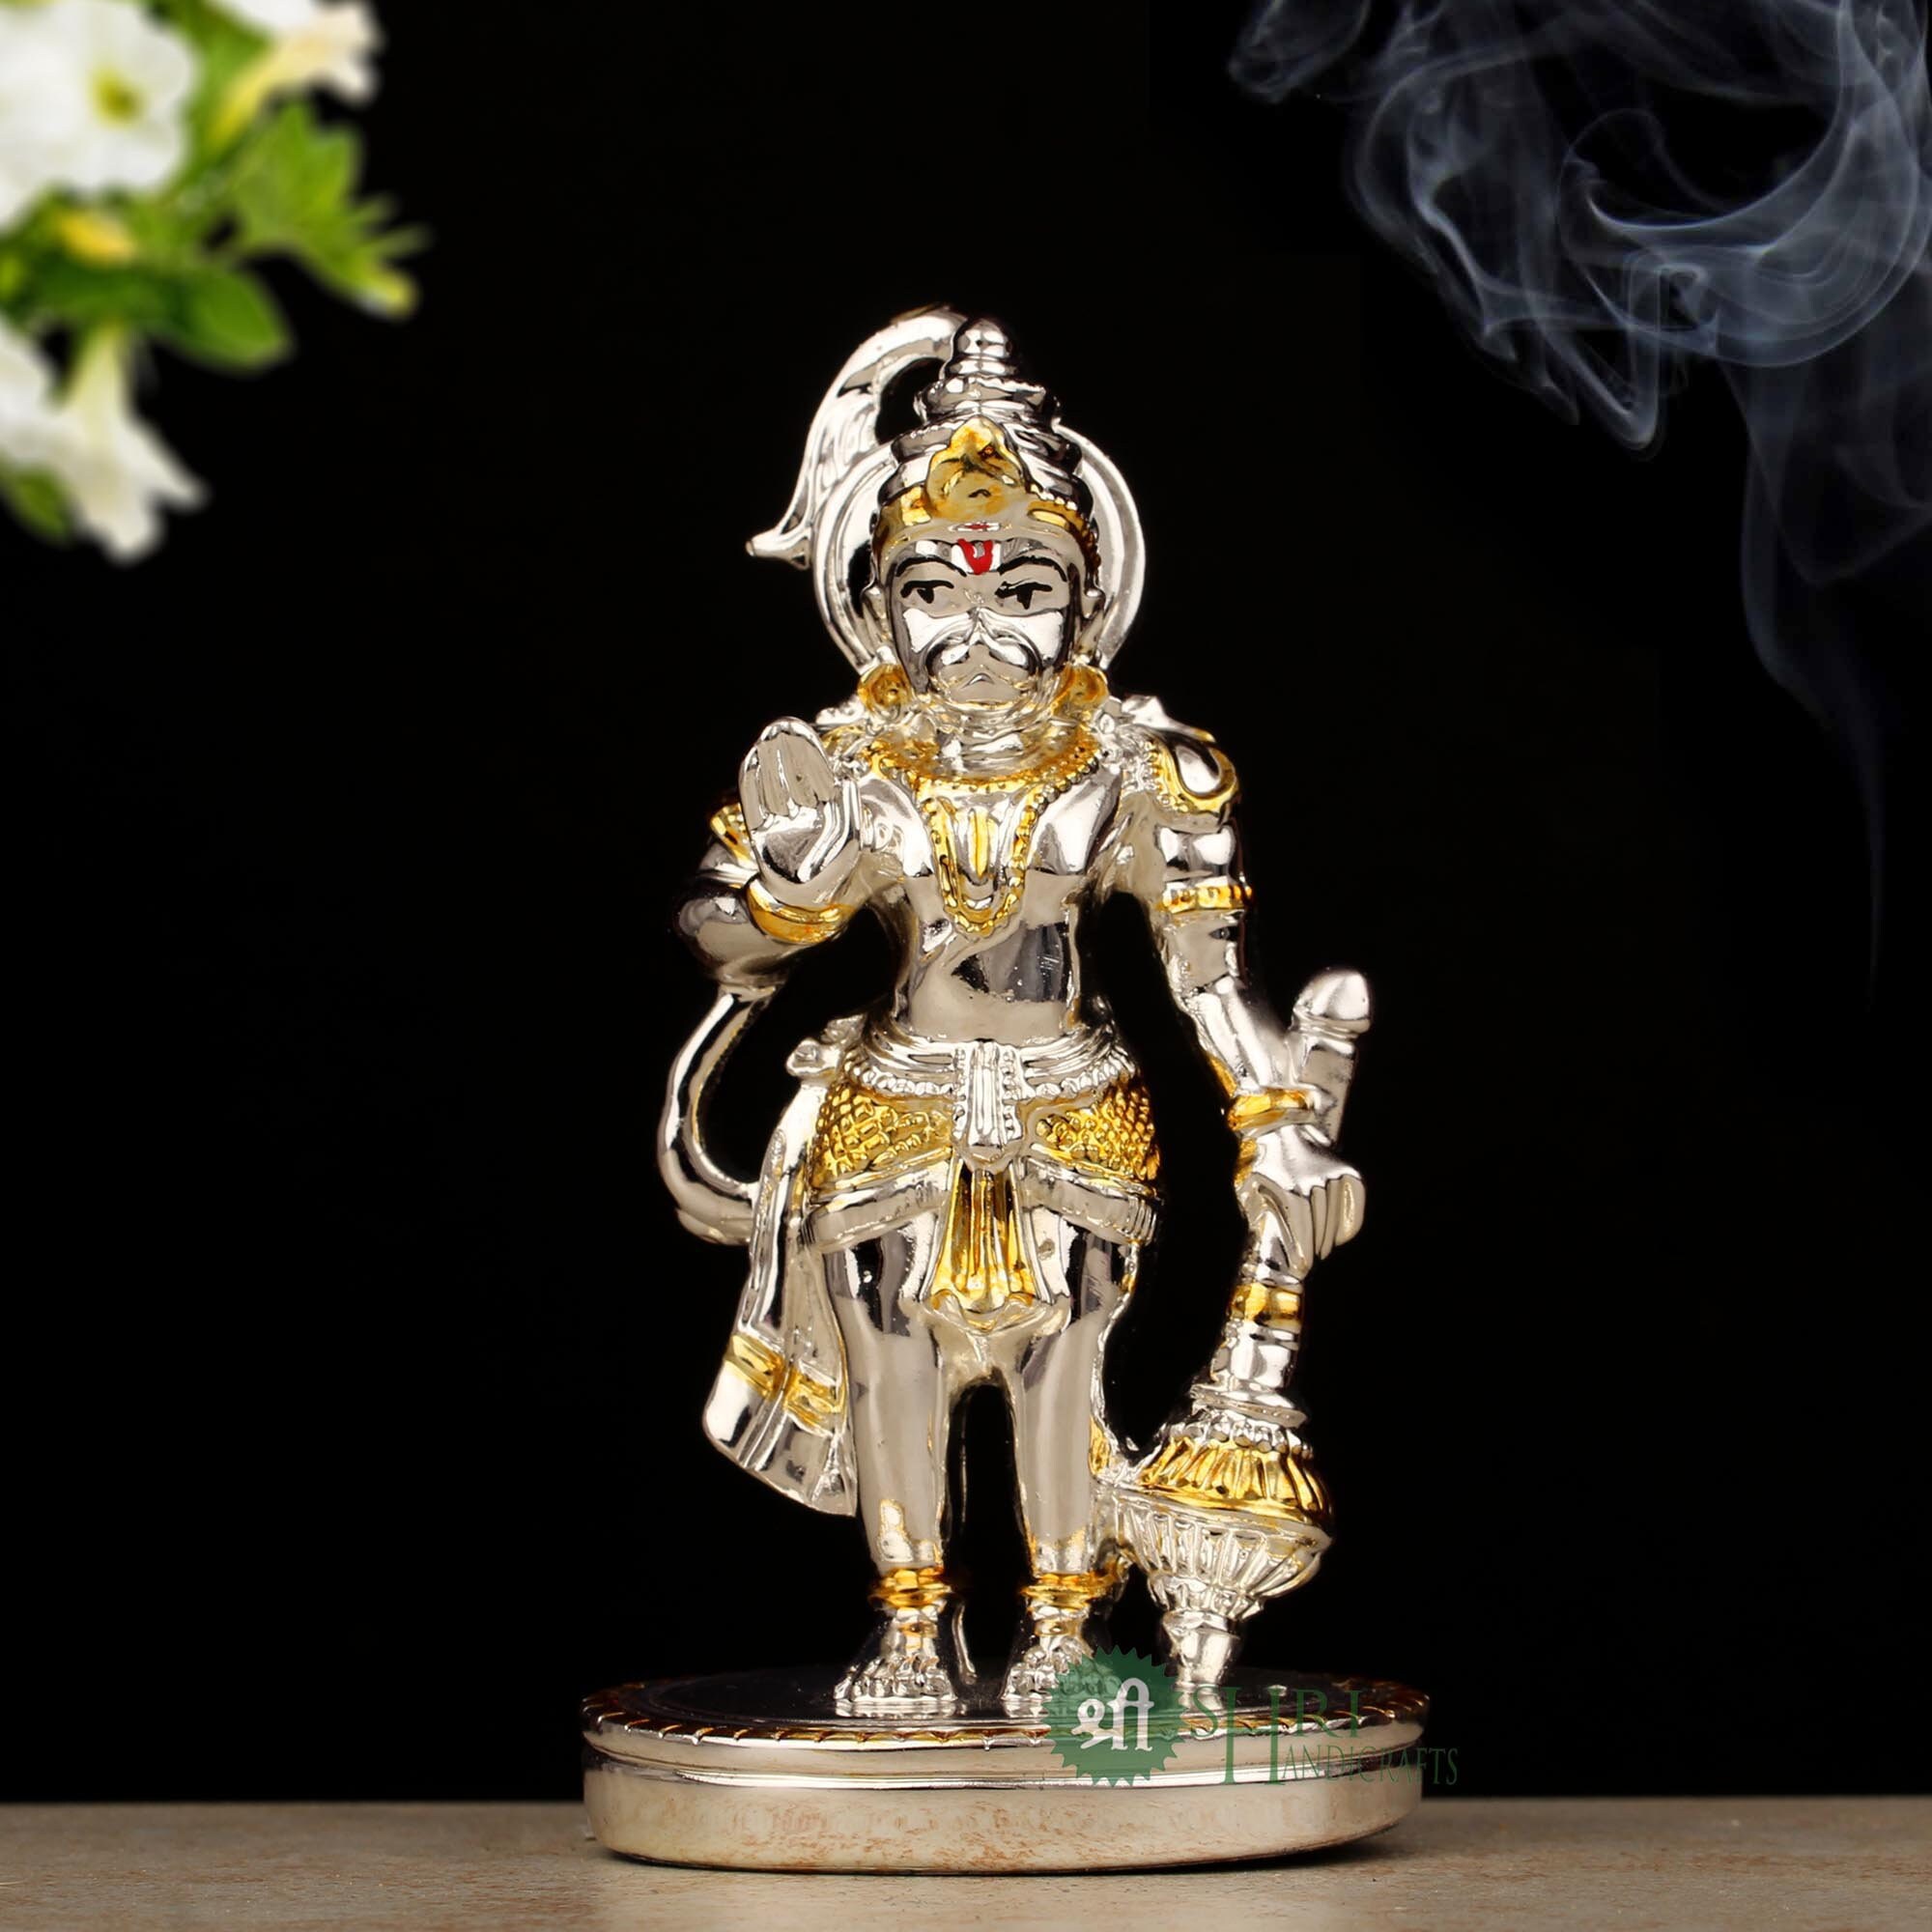 Lord Hanuman Statue For Car Dashboard Gold Plated Sculpture Hindu God Figurine Temple Feng Shui Decor Ram Bhakt Of Strength Bajrangbali